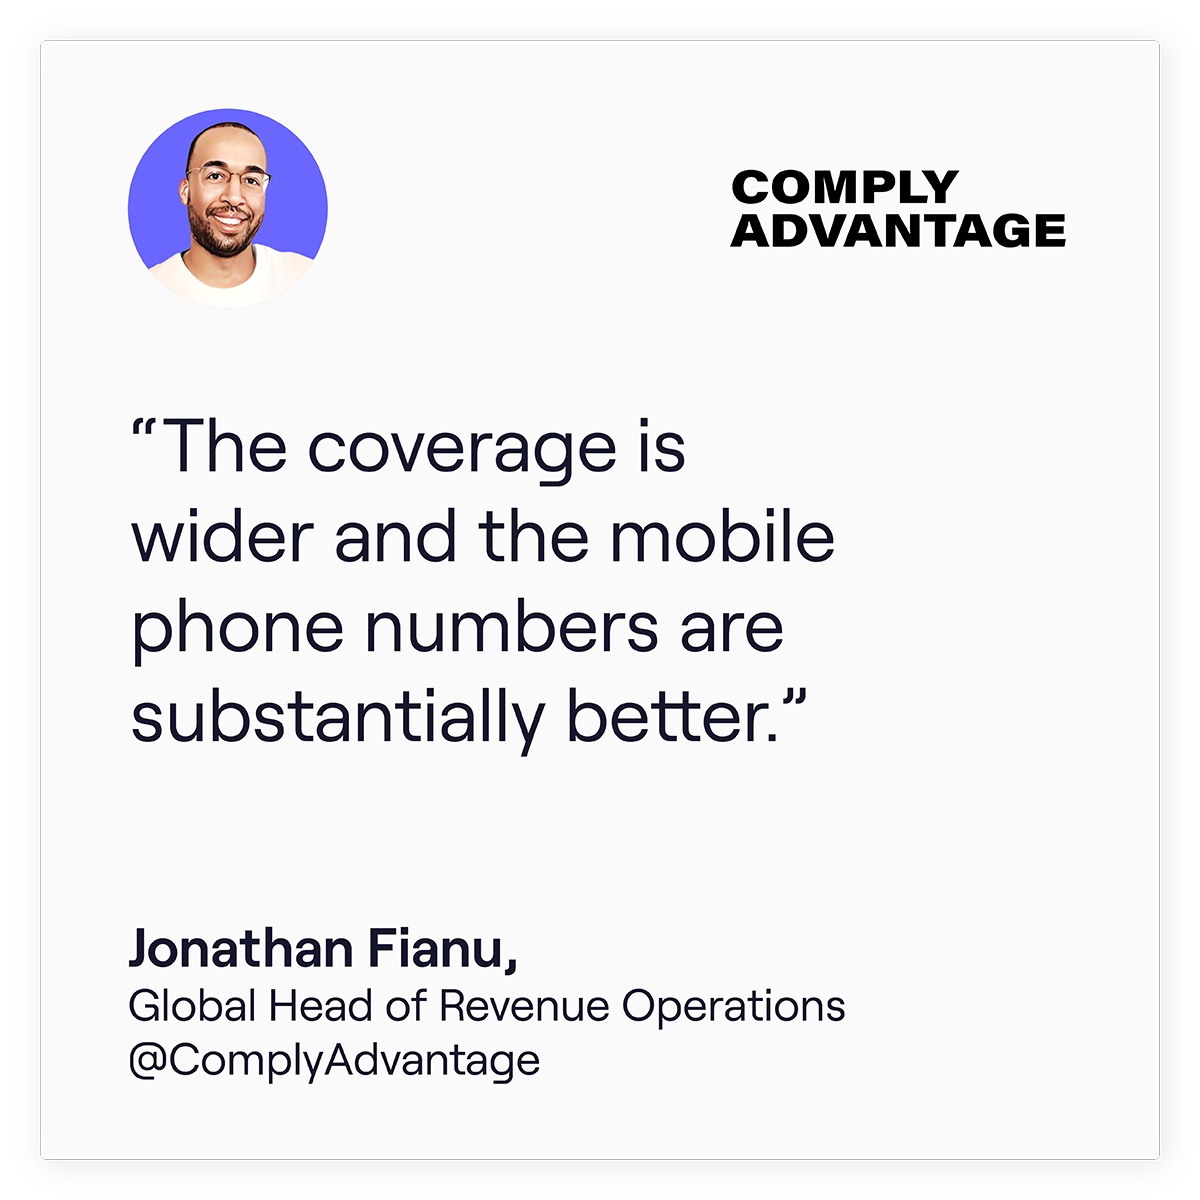 Comply advantage testimonial, coverage + mobiles